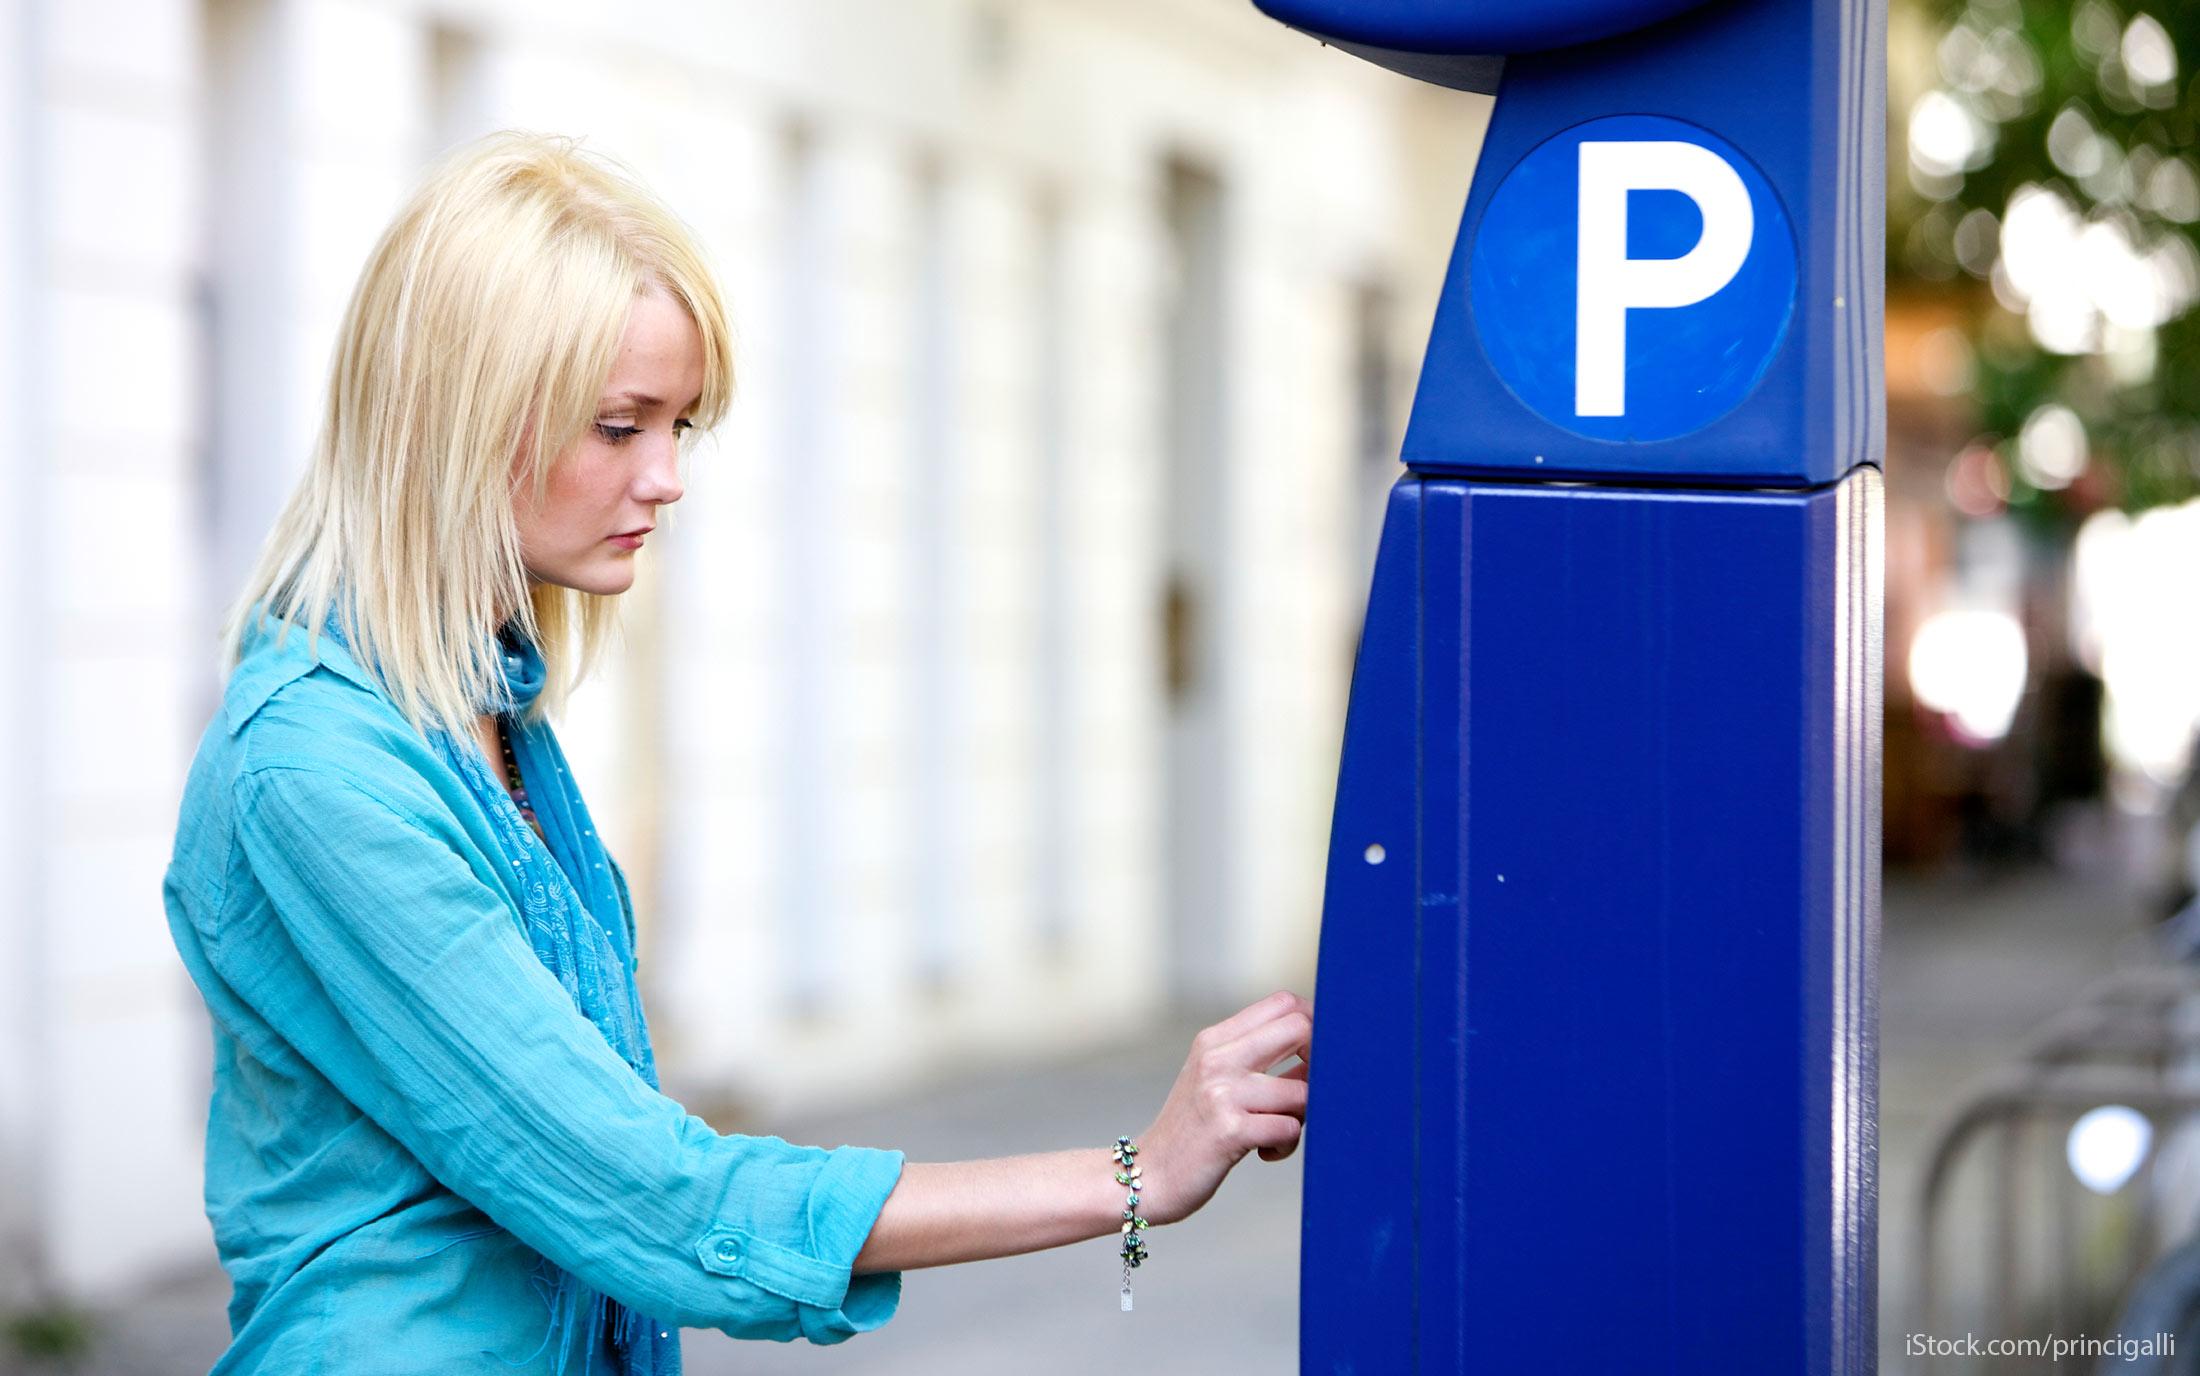  cashless parking meters